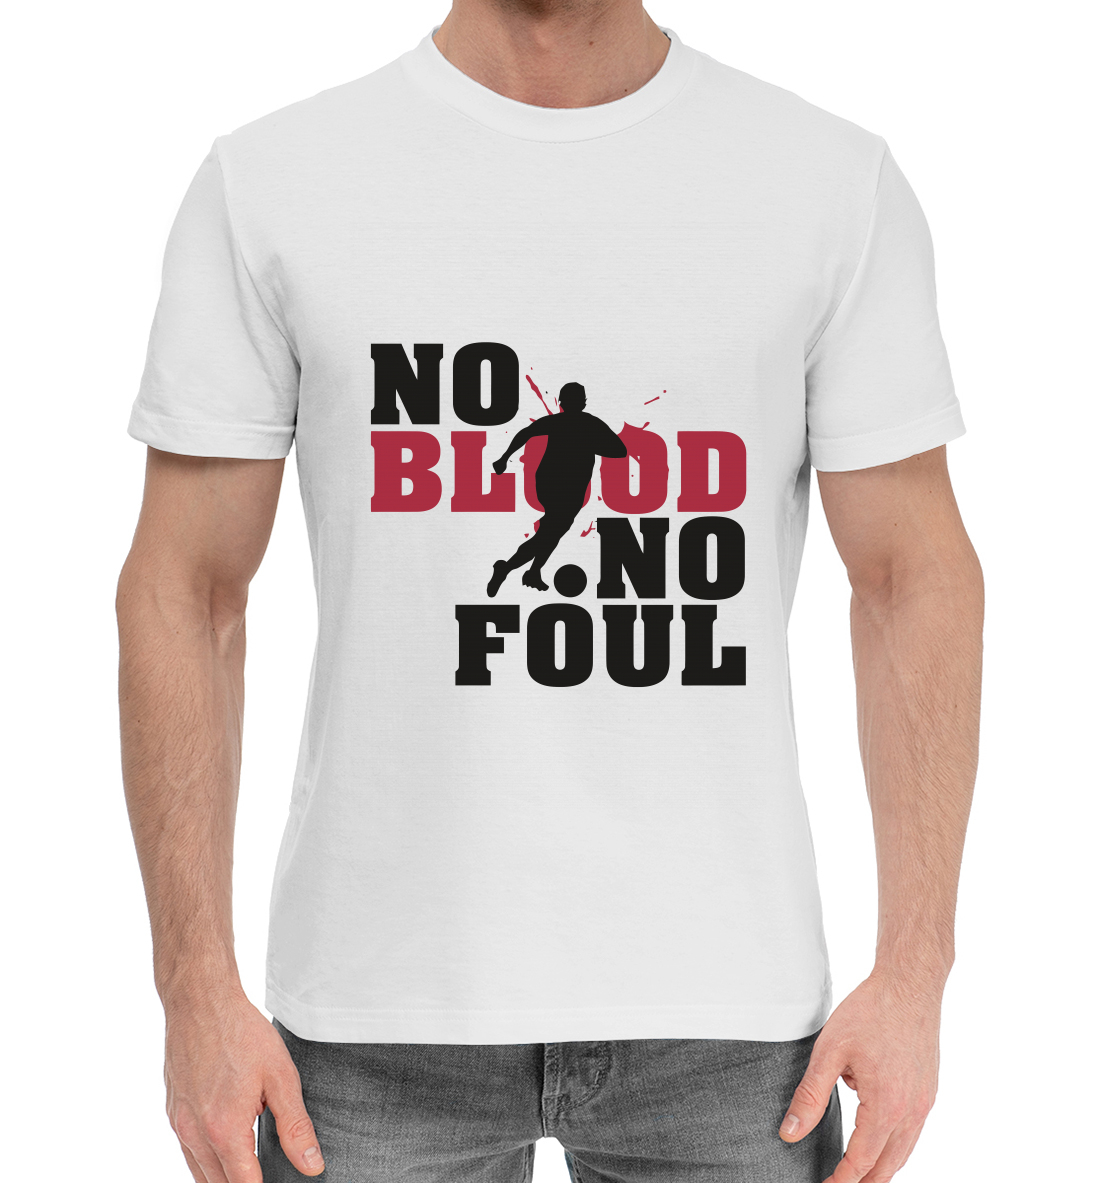 Мужская Хлопковая футболка Нет крови - нет фола, артикул FTO-788234-hfu-2mp